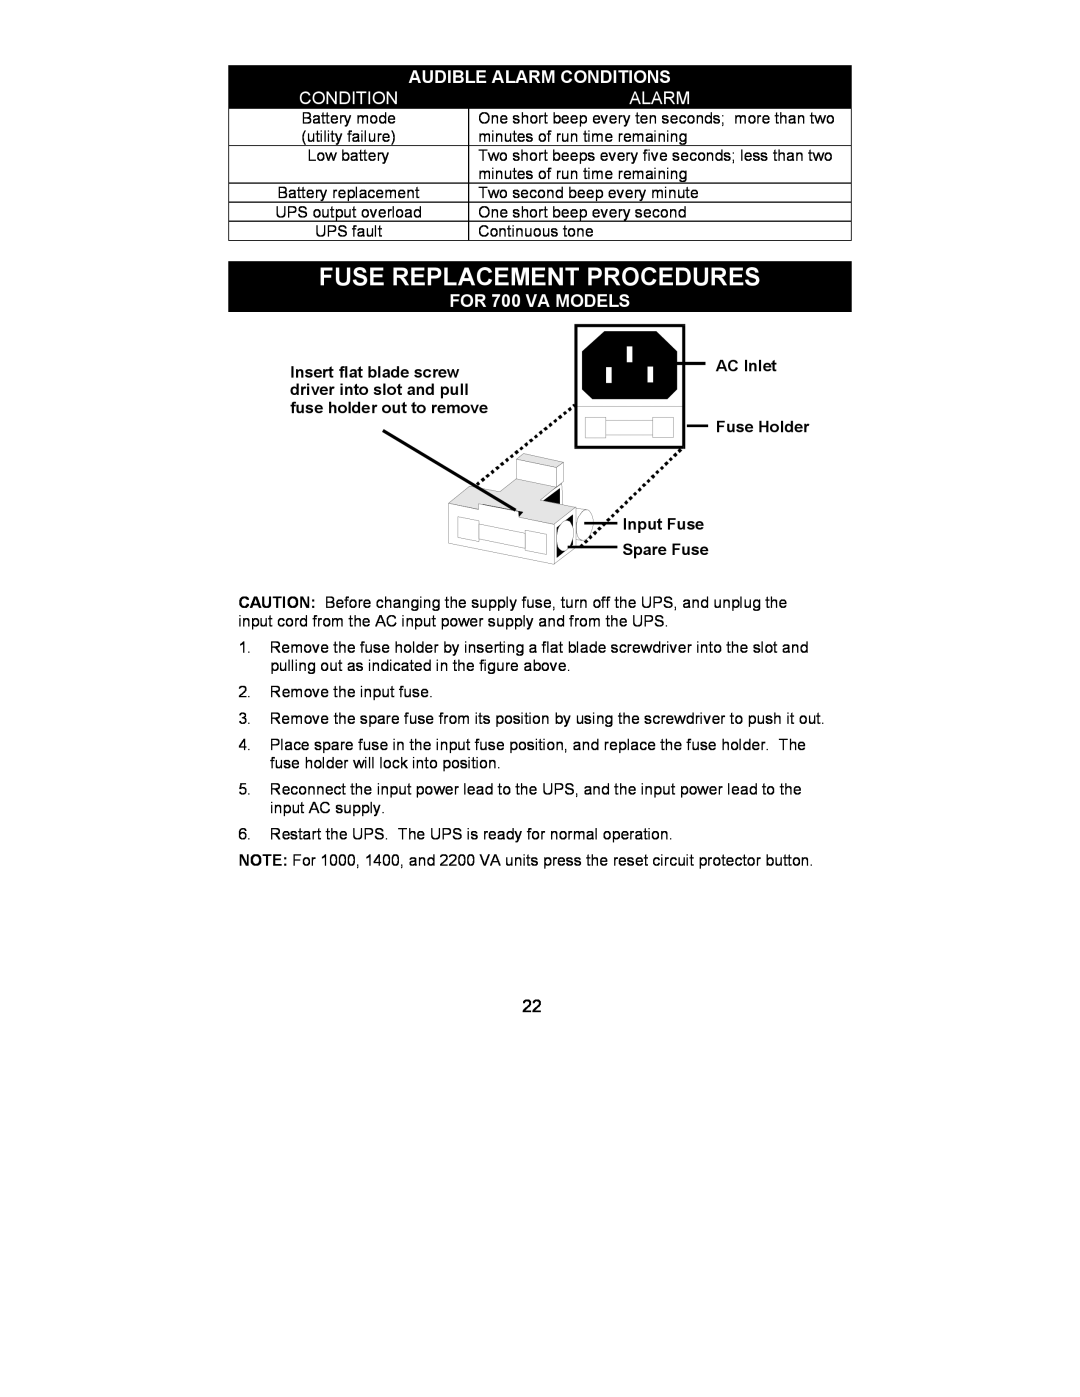 Liebert 700-2200 VA user manual Fuse Replacement Procedures, Audible Alarm Conditions, FOR 700 VA MODELS, AC Inlet 